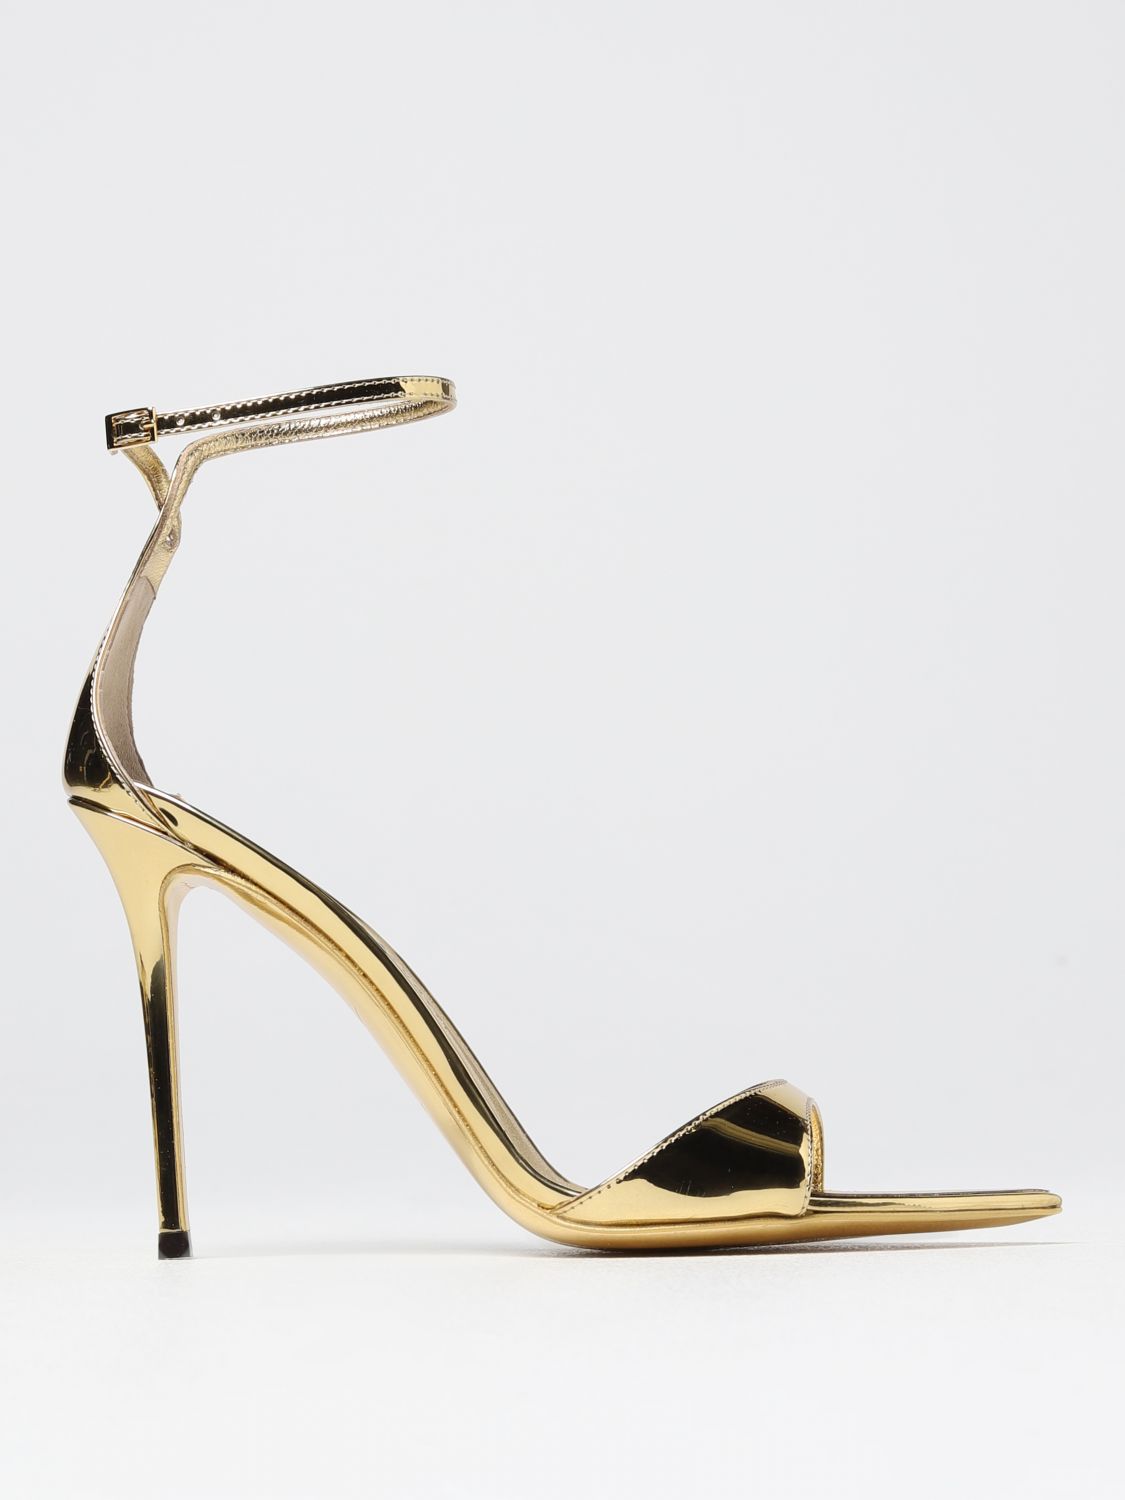 GIUSEPPE ZANOTTI: sandals woman - Gold | Giuseppe Zanotti heeled sandals on GIGLIO.COM